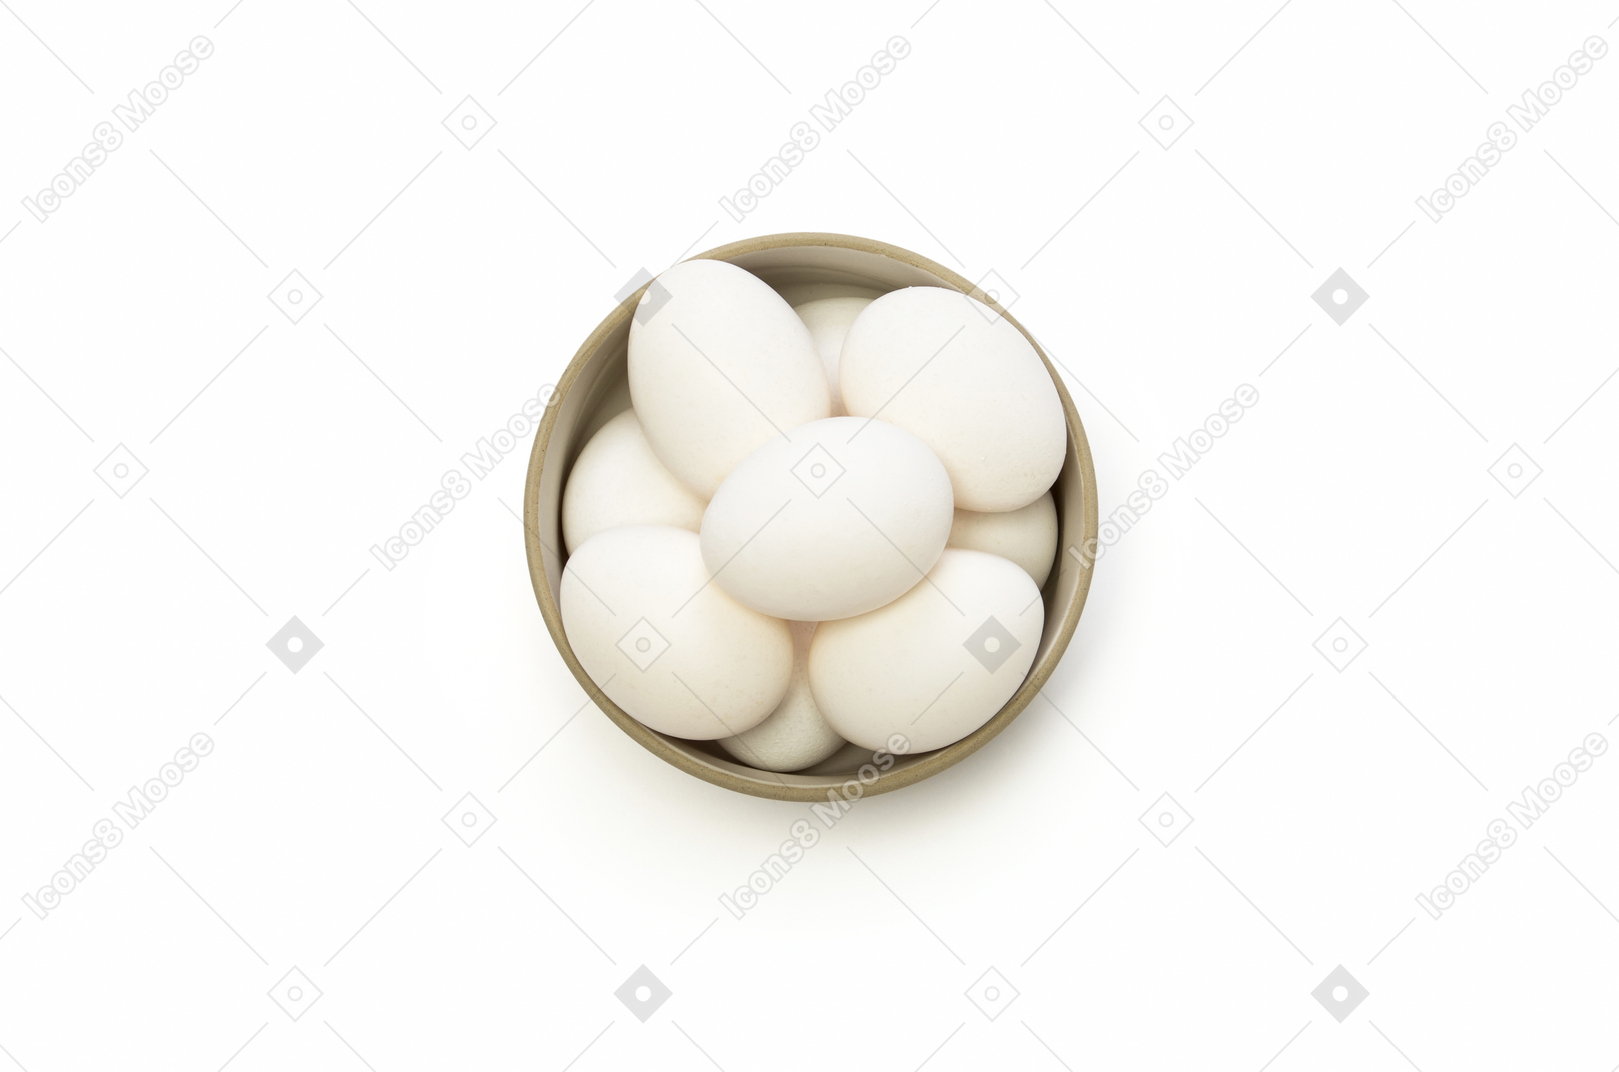 White chicken eggs in a ceramic bowl